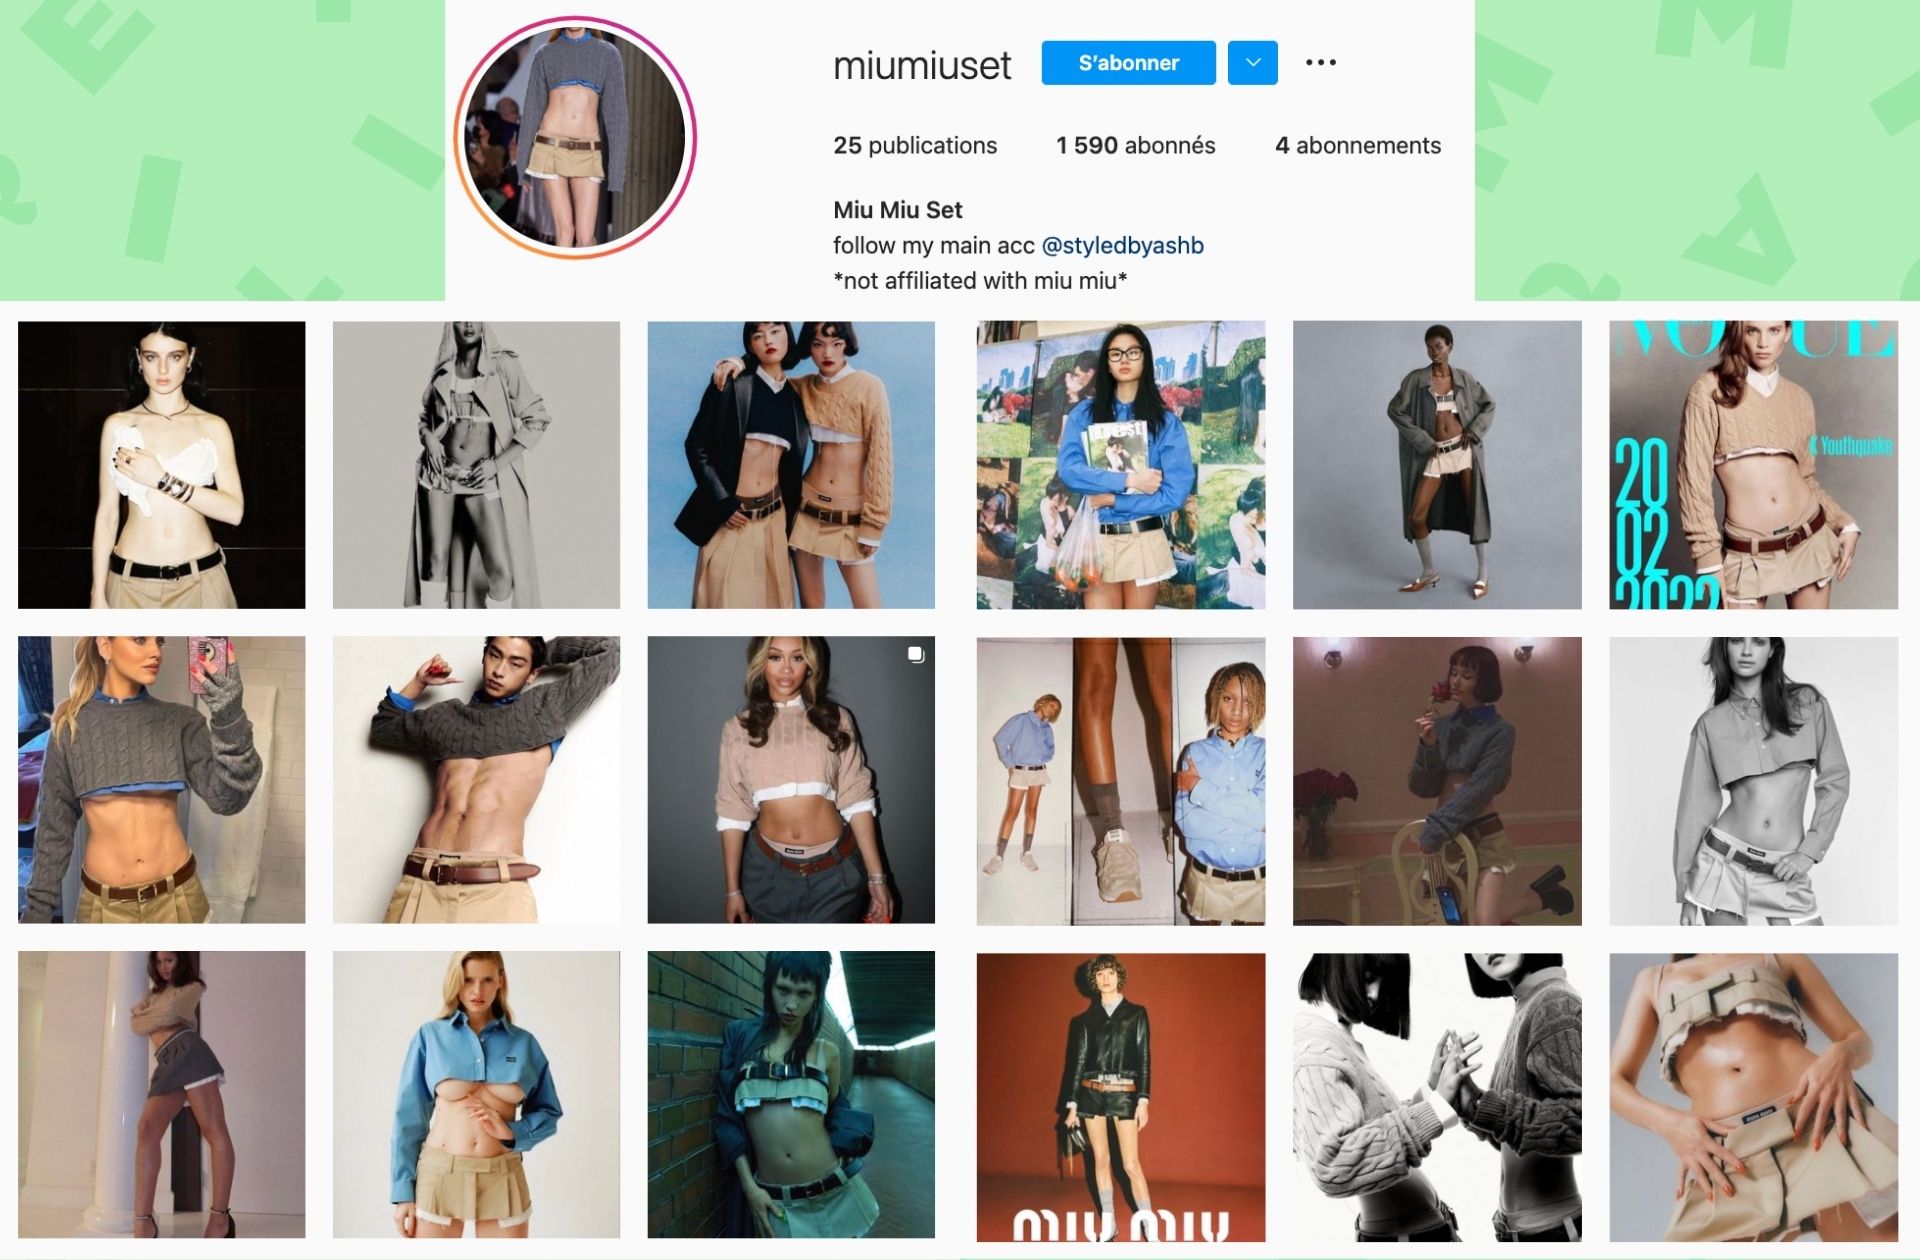 Le compte instagram dédié à l’ensemble sectionné Miu Miu